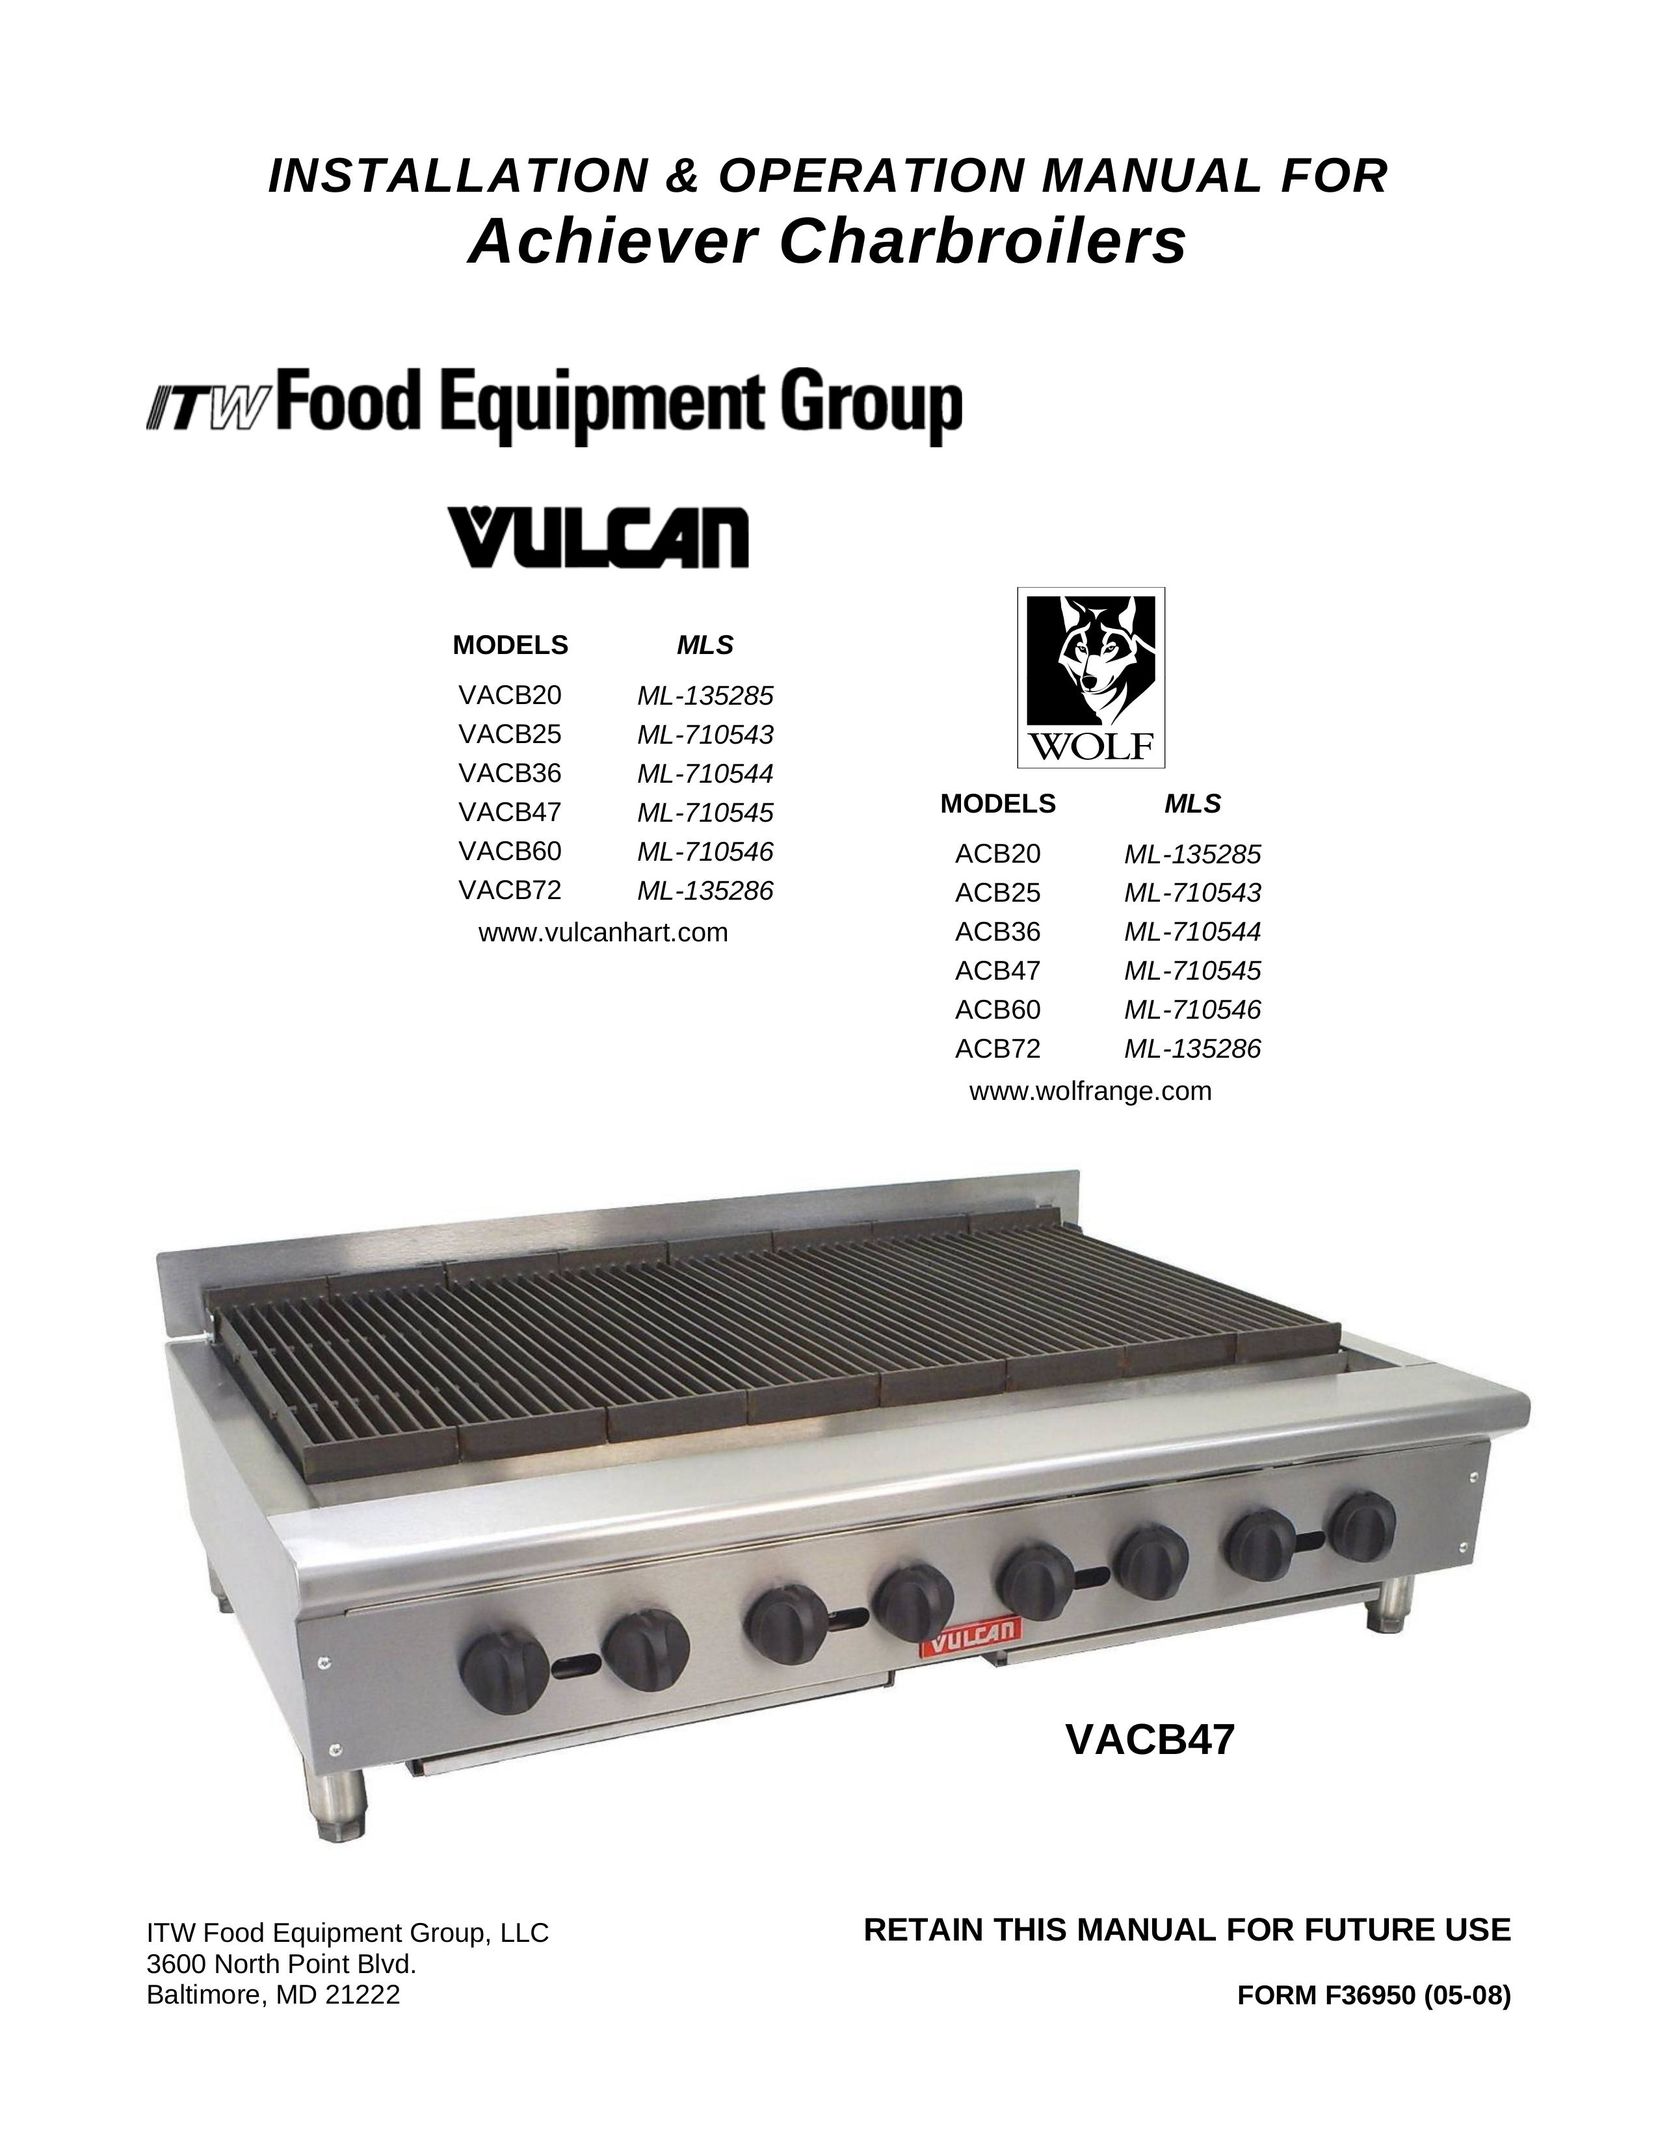 Vulcan-Hart ACB60 ML-710546 Oven User Manual